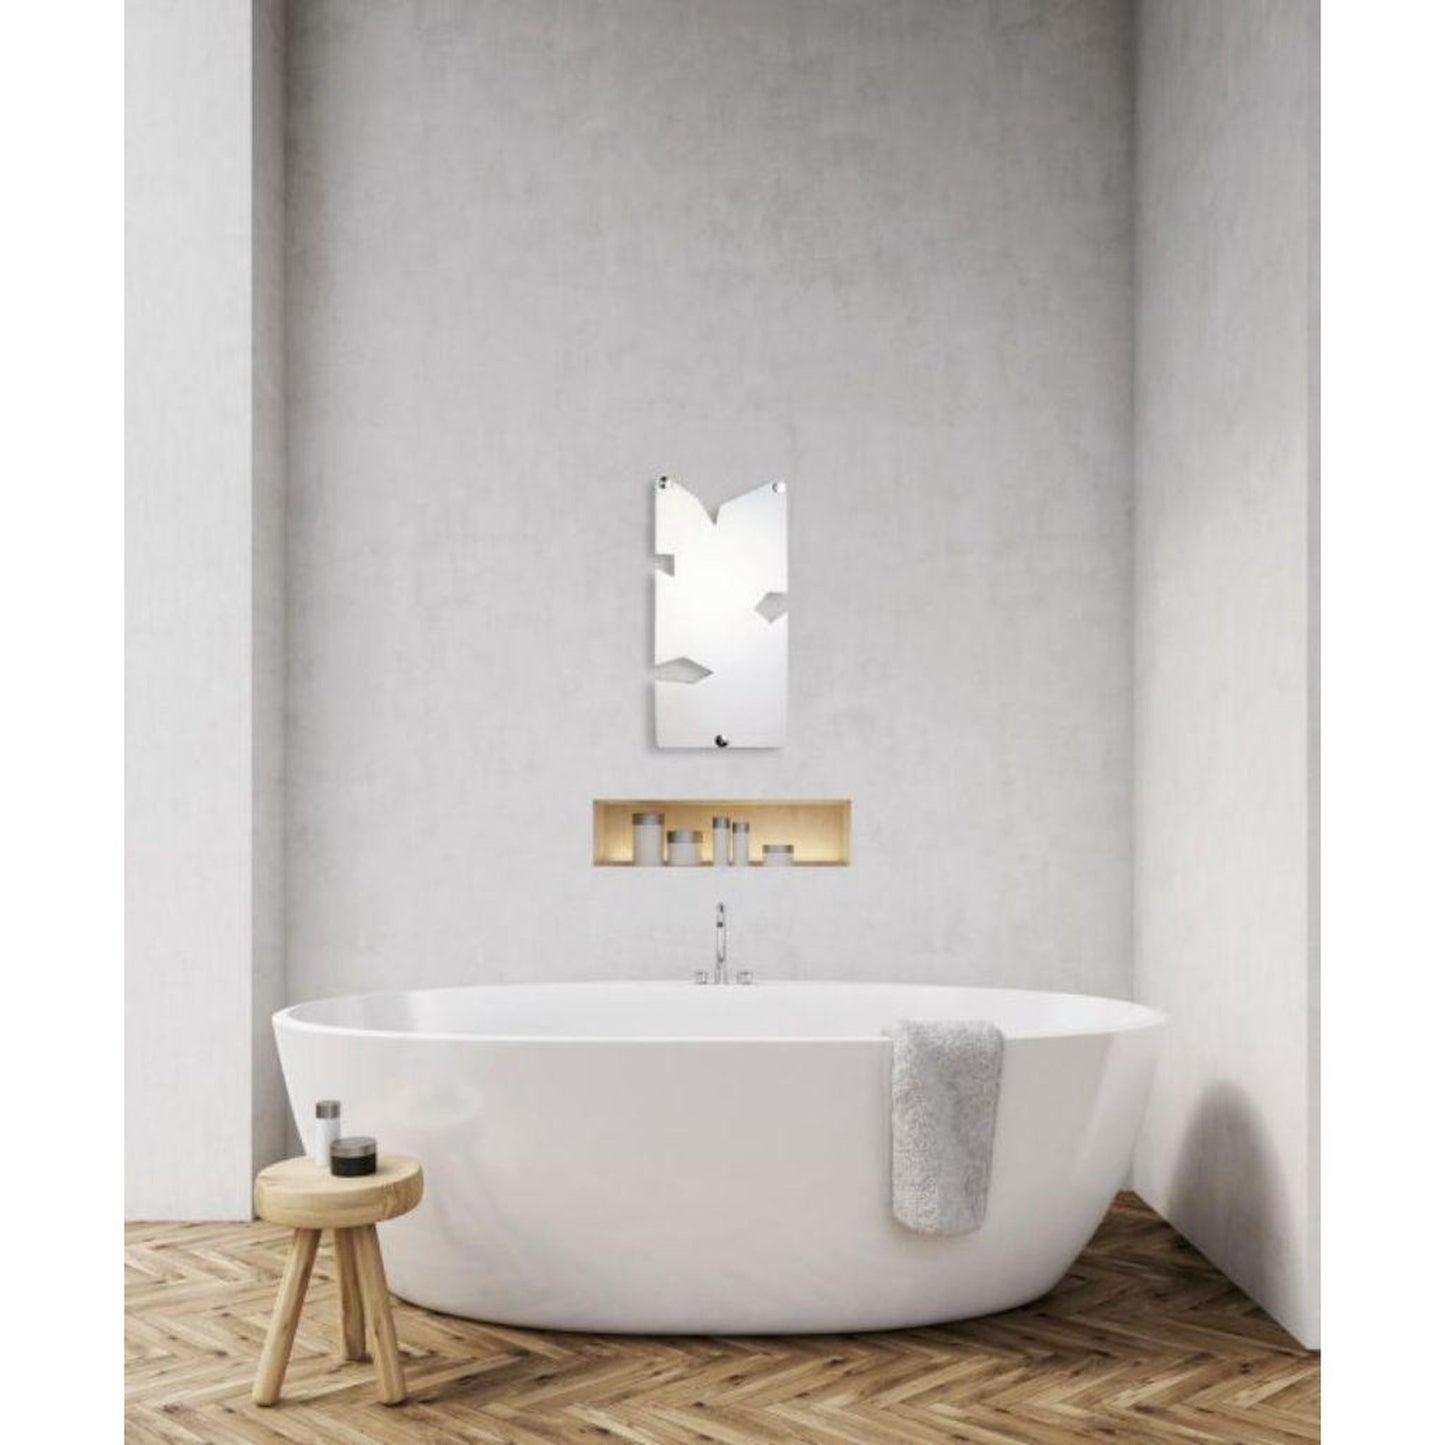 Maya Bath Moderno 12" x 25" White Ceramic Wall-Mounted Hardwired Electric Towel Warmer